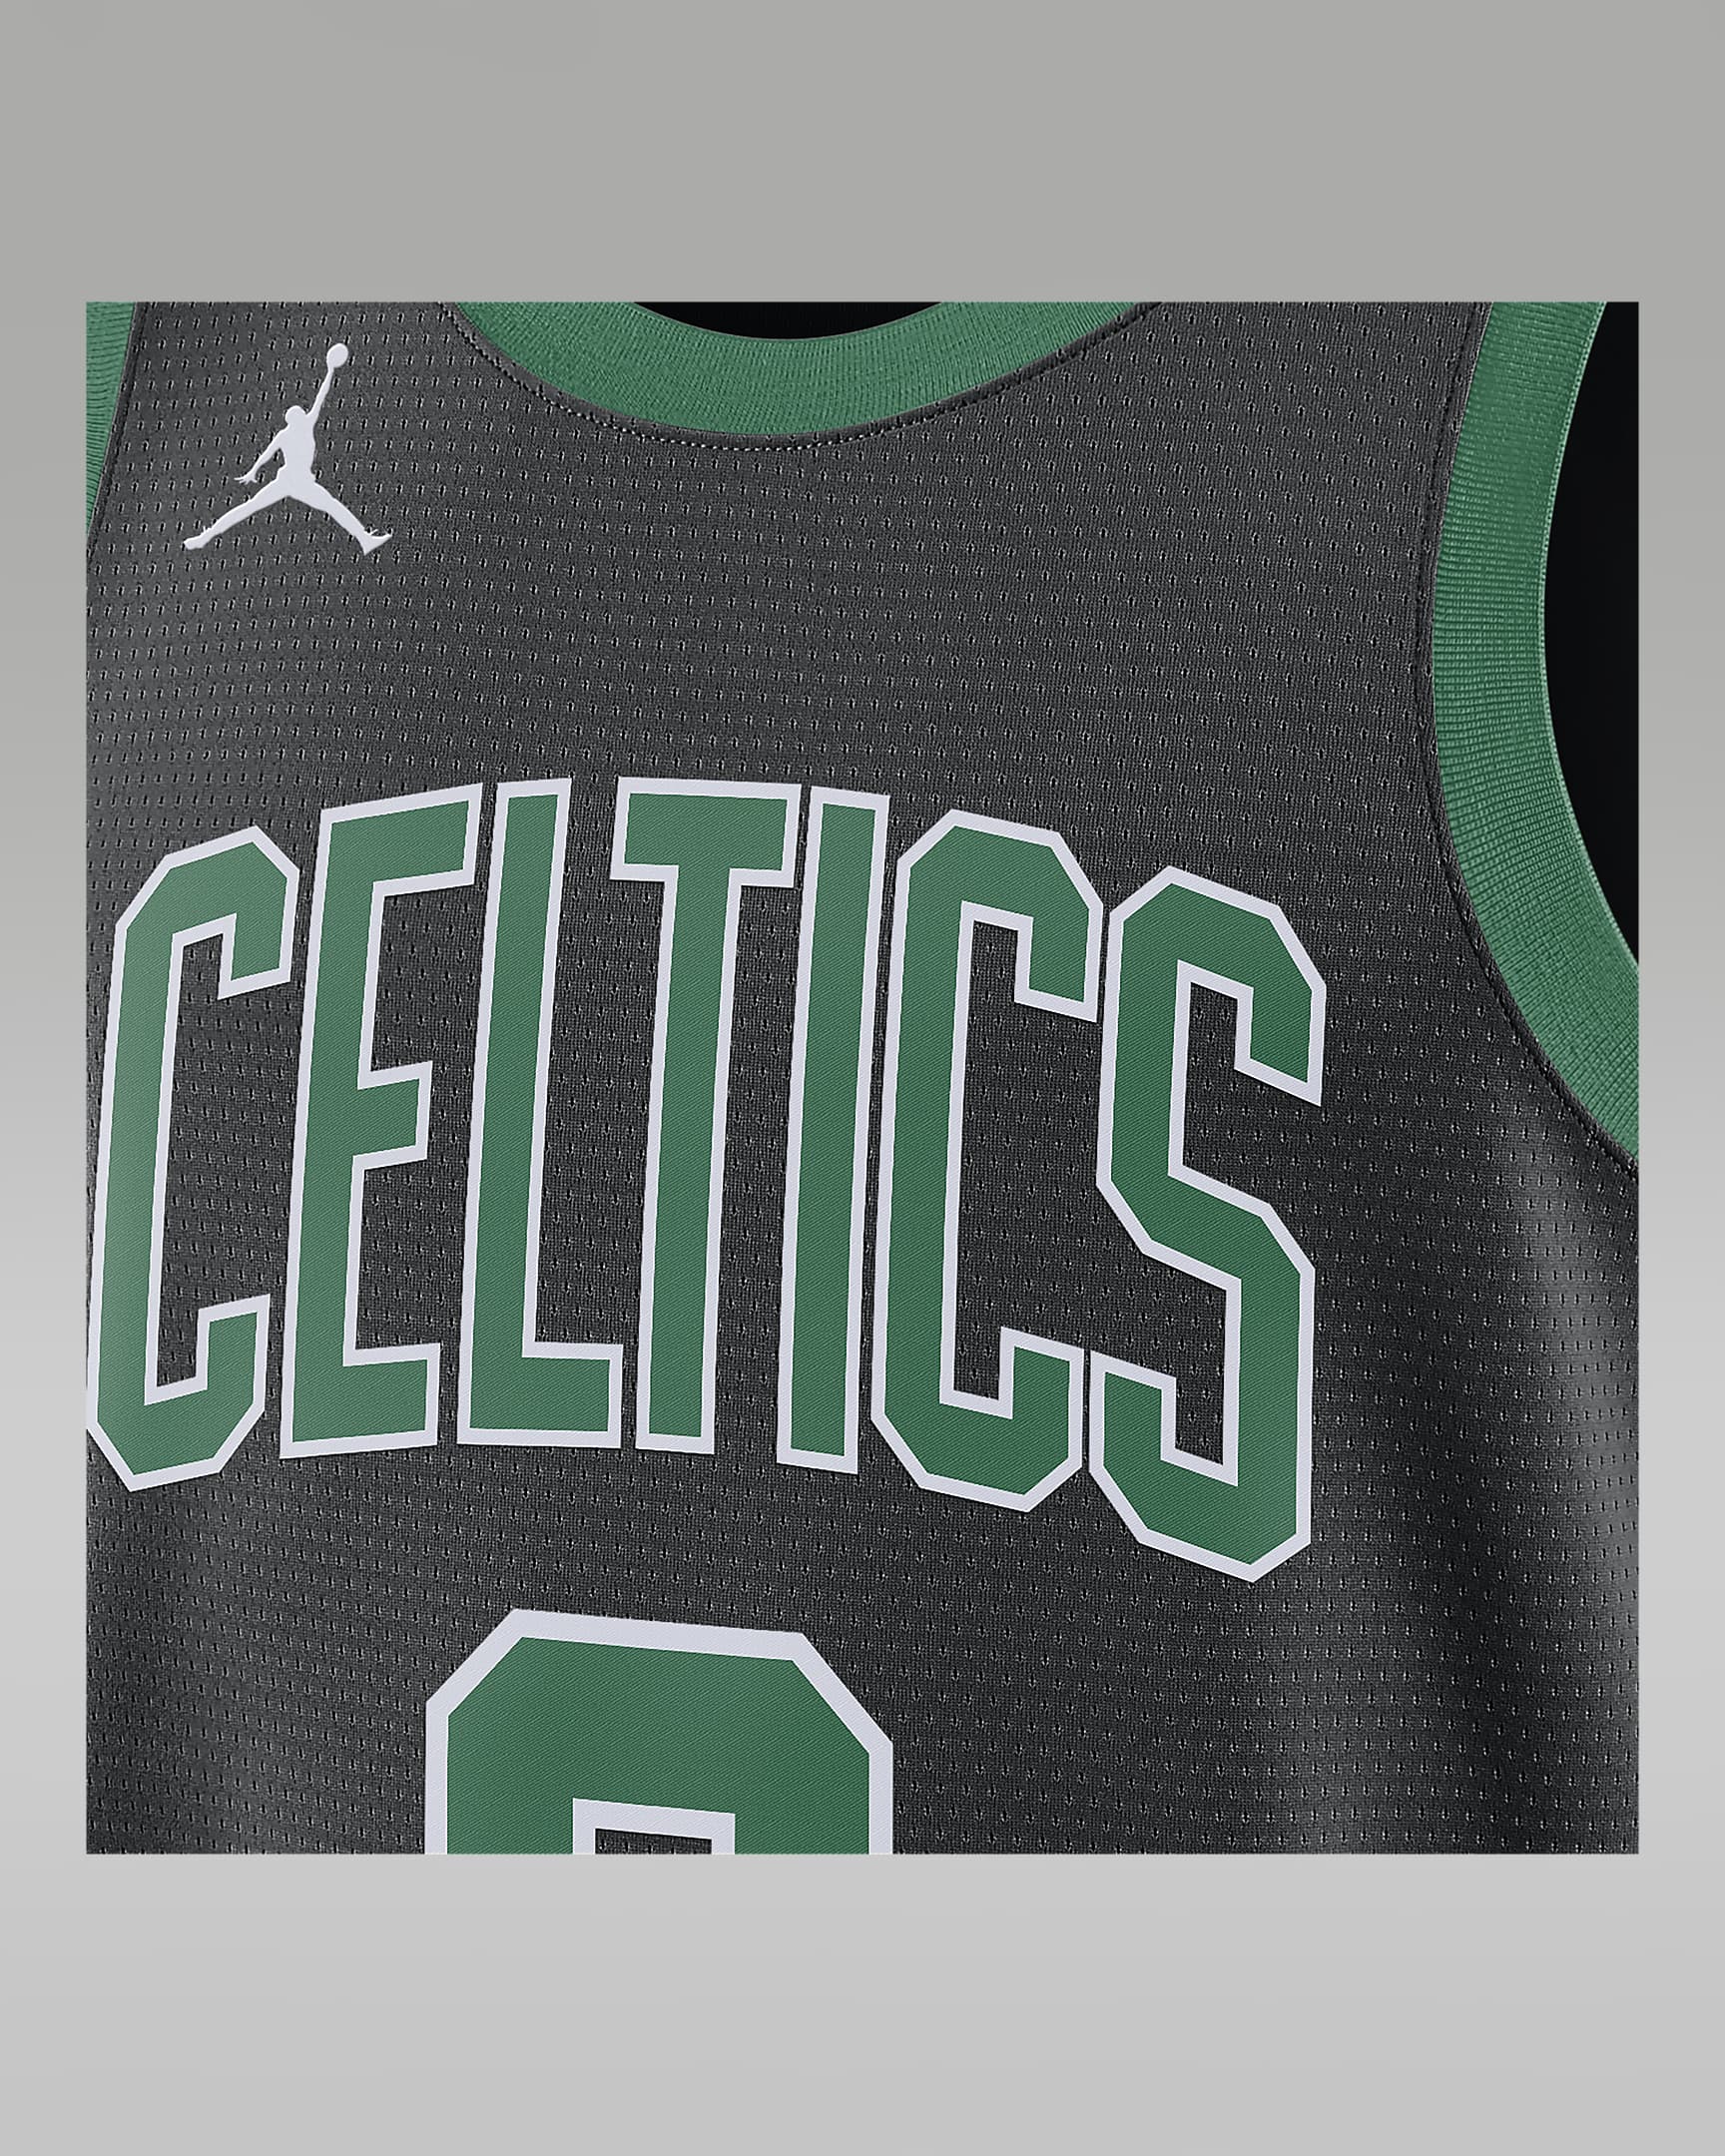 Boston Celtics Statement Edition Jordan Dri-FIT NBA Swingman-trøje til mænd - sort